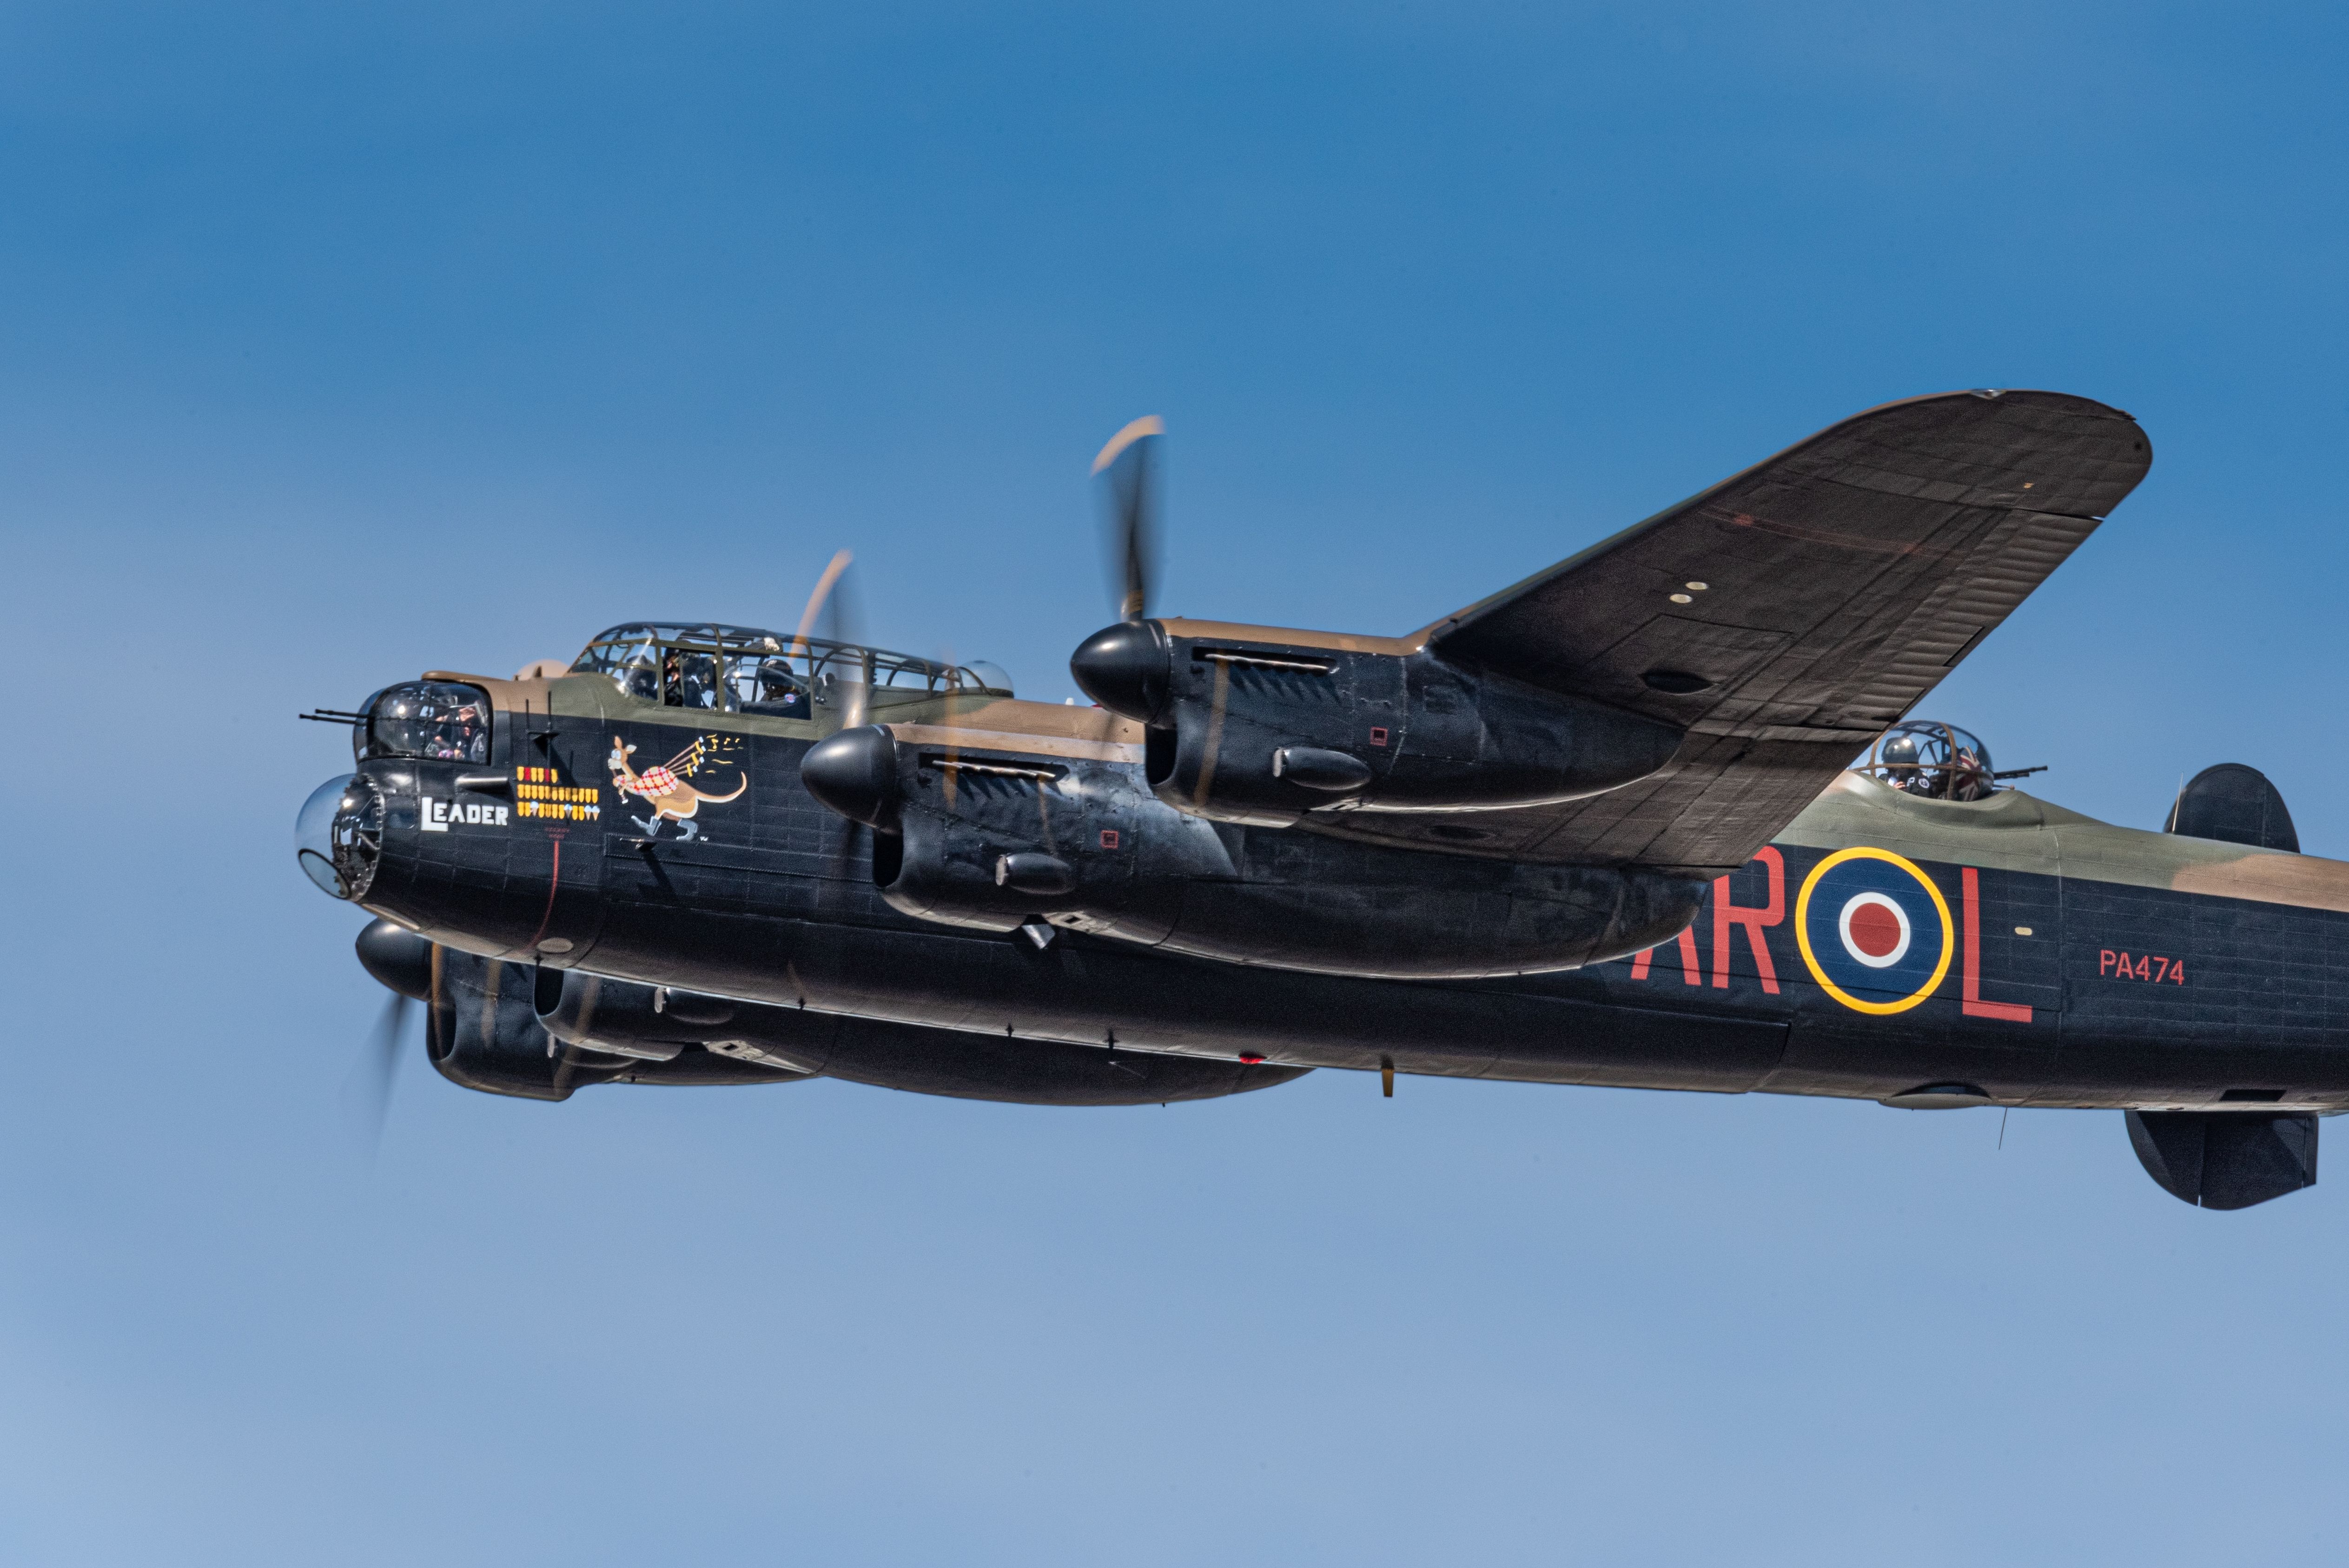 An Avro Lancaster flying in the sky.